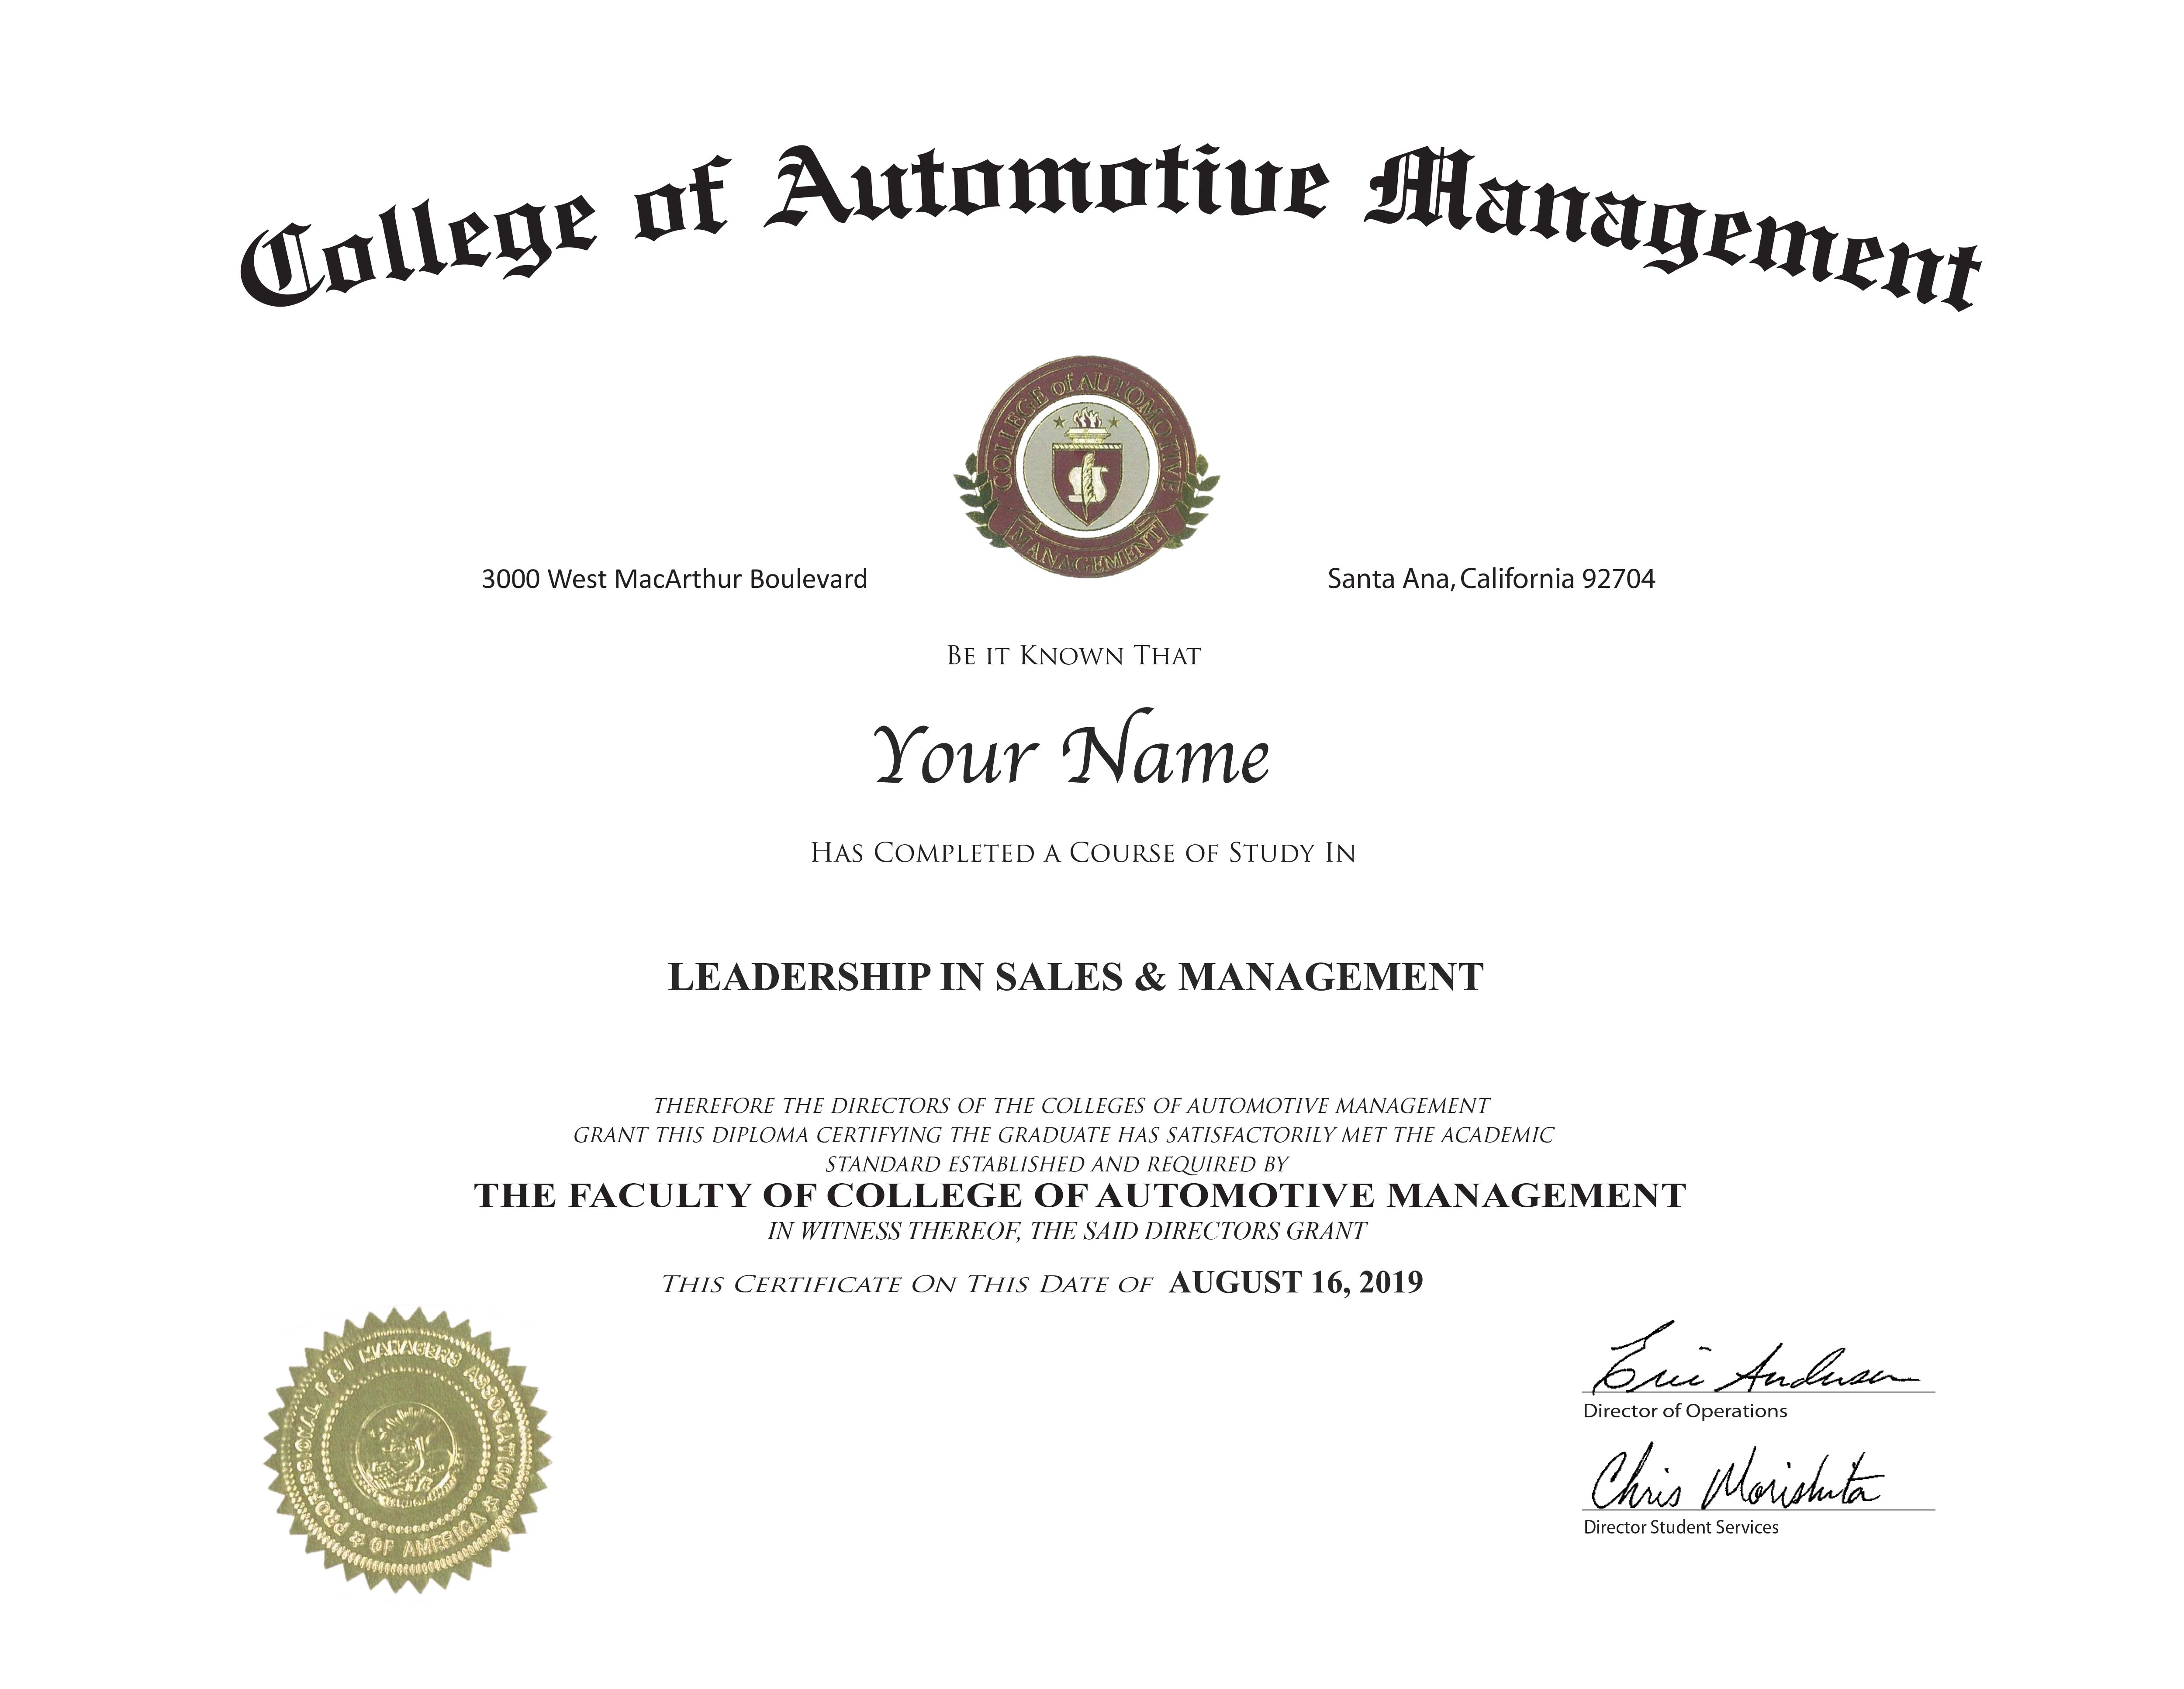 Leadership in Sales & Management - certificate